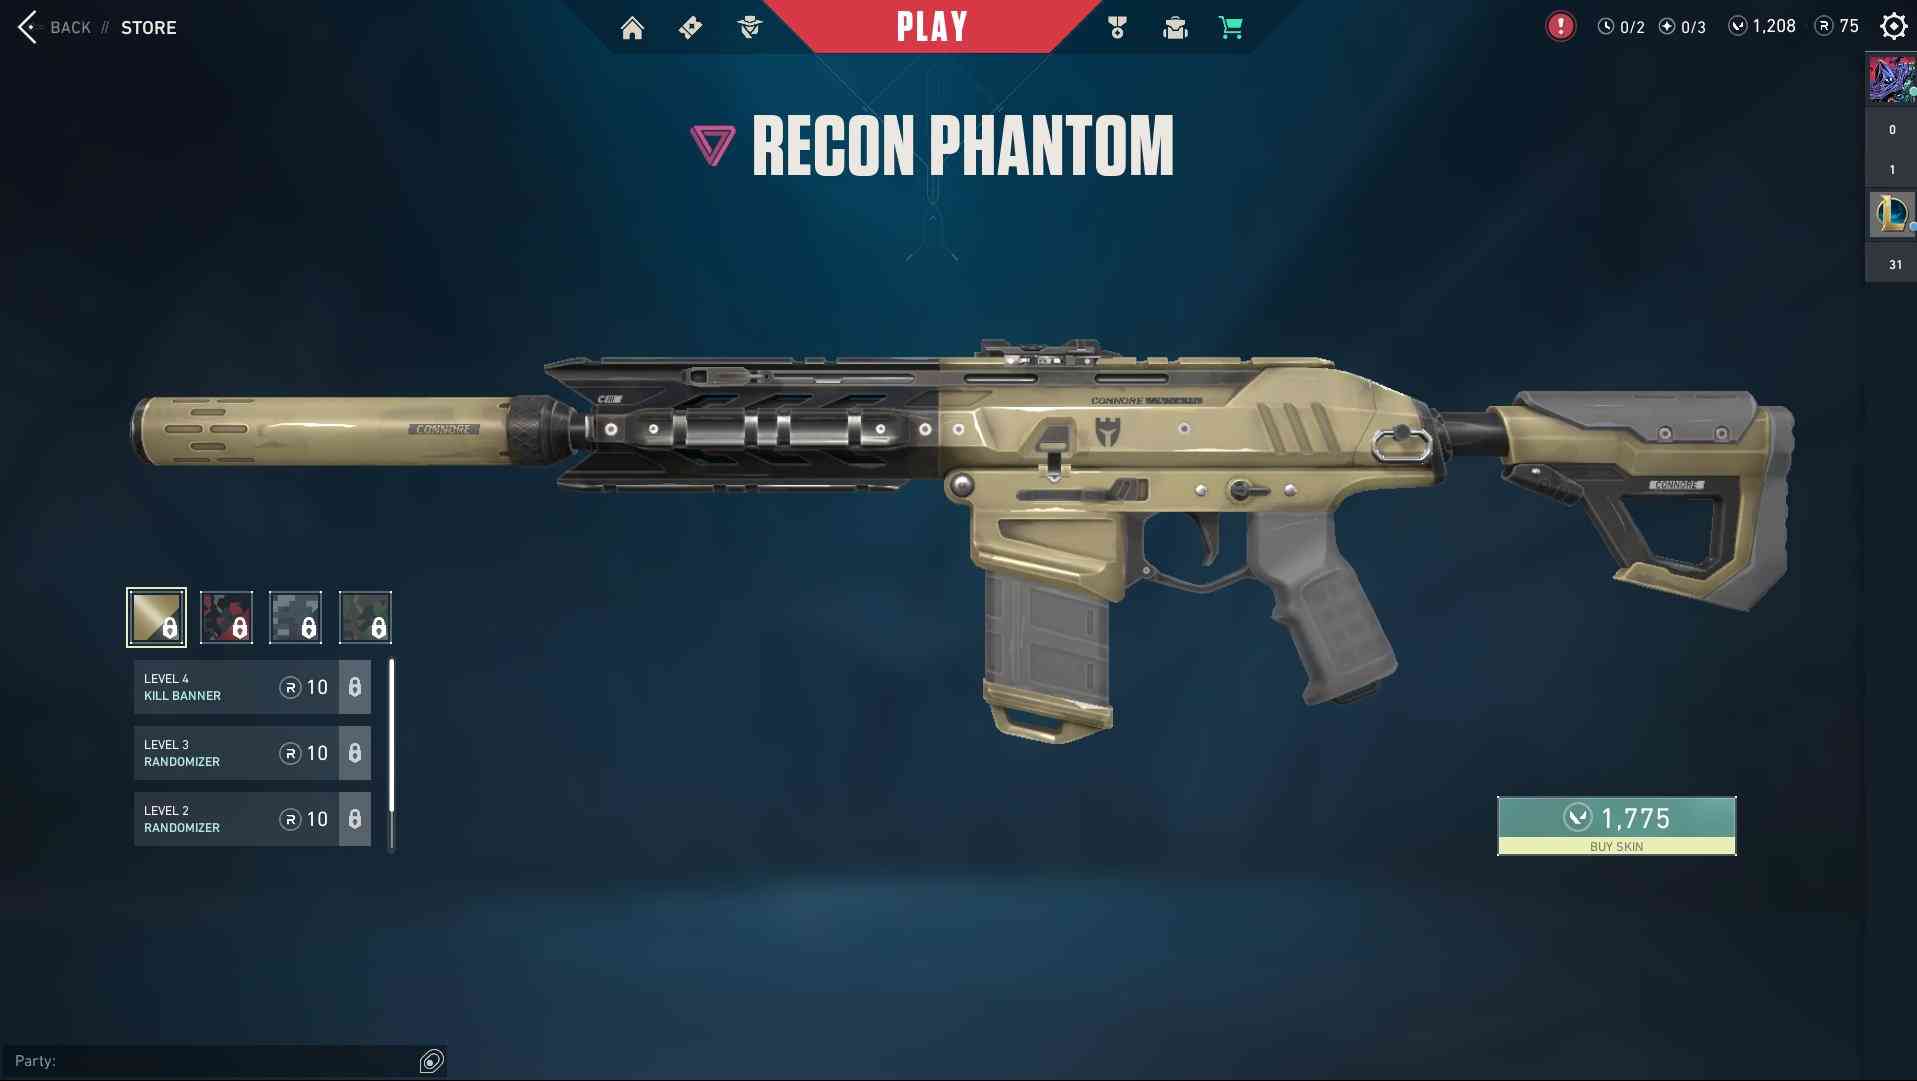 Recon Phantom (Image Credits: Riot Games)